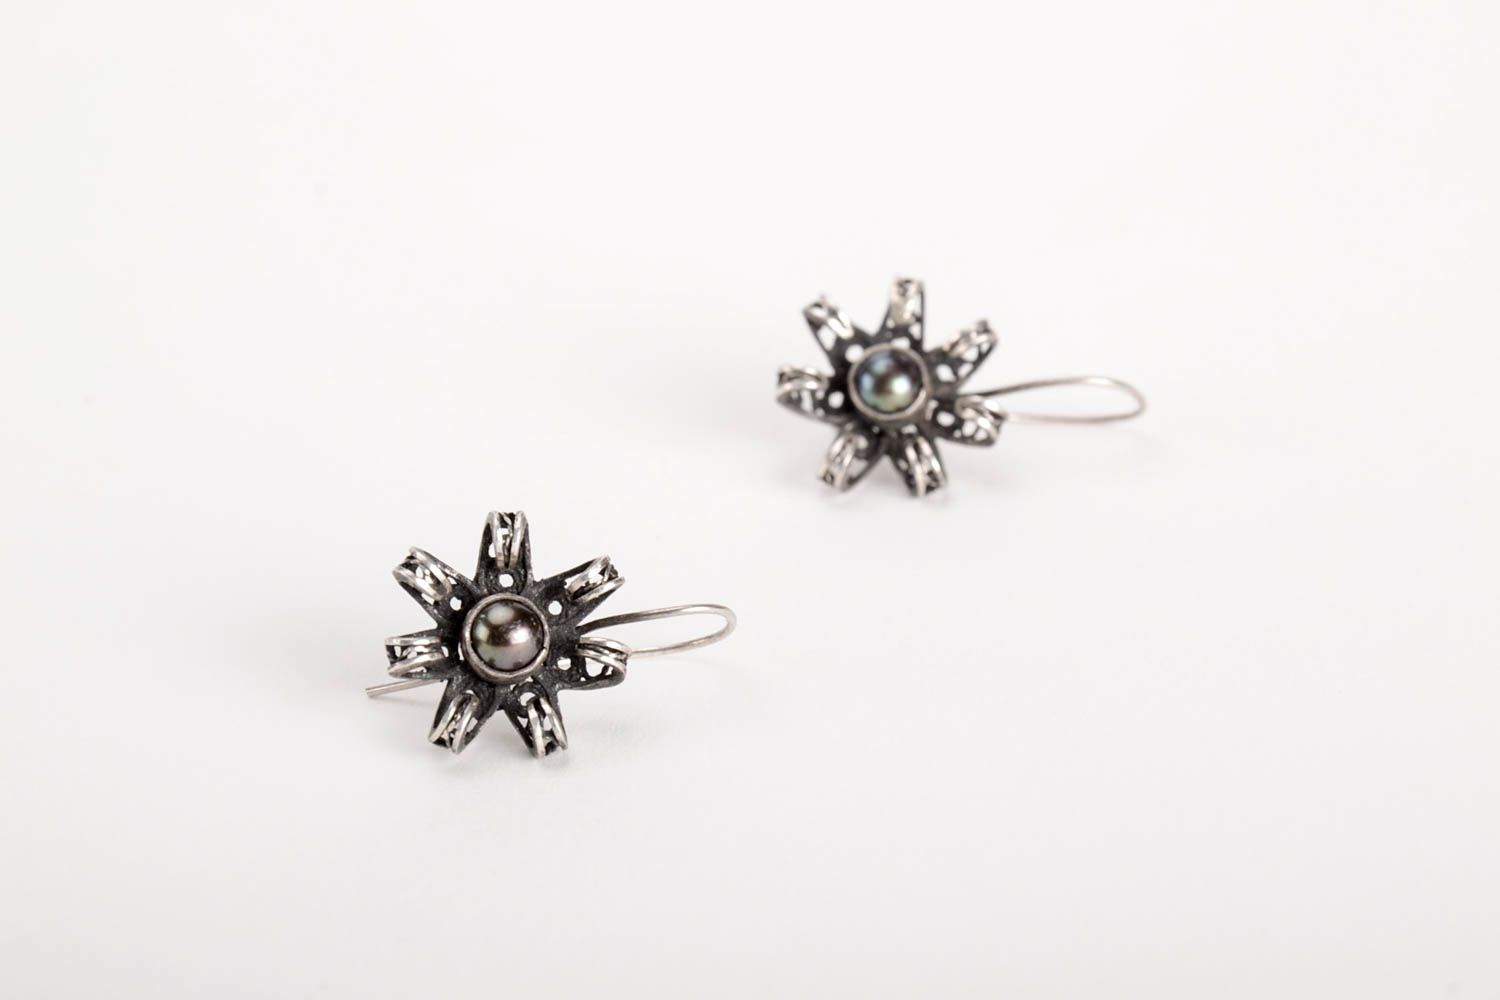 Handmade earrings designer earrings unusual silver earrings gift ideas photo 2